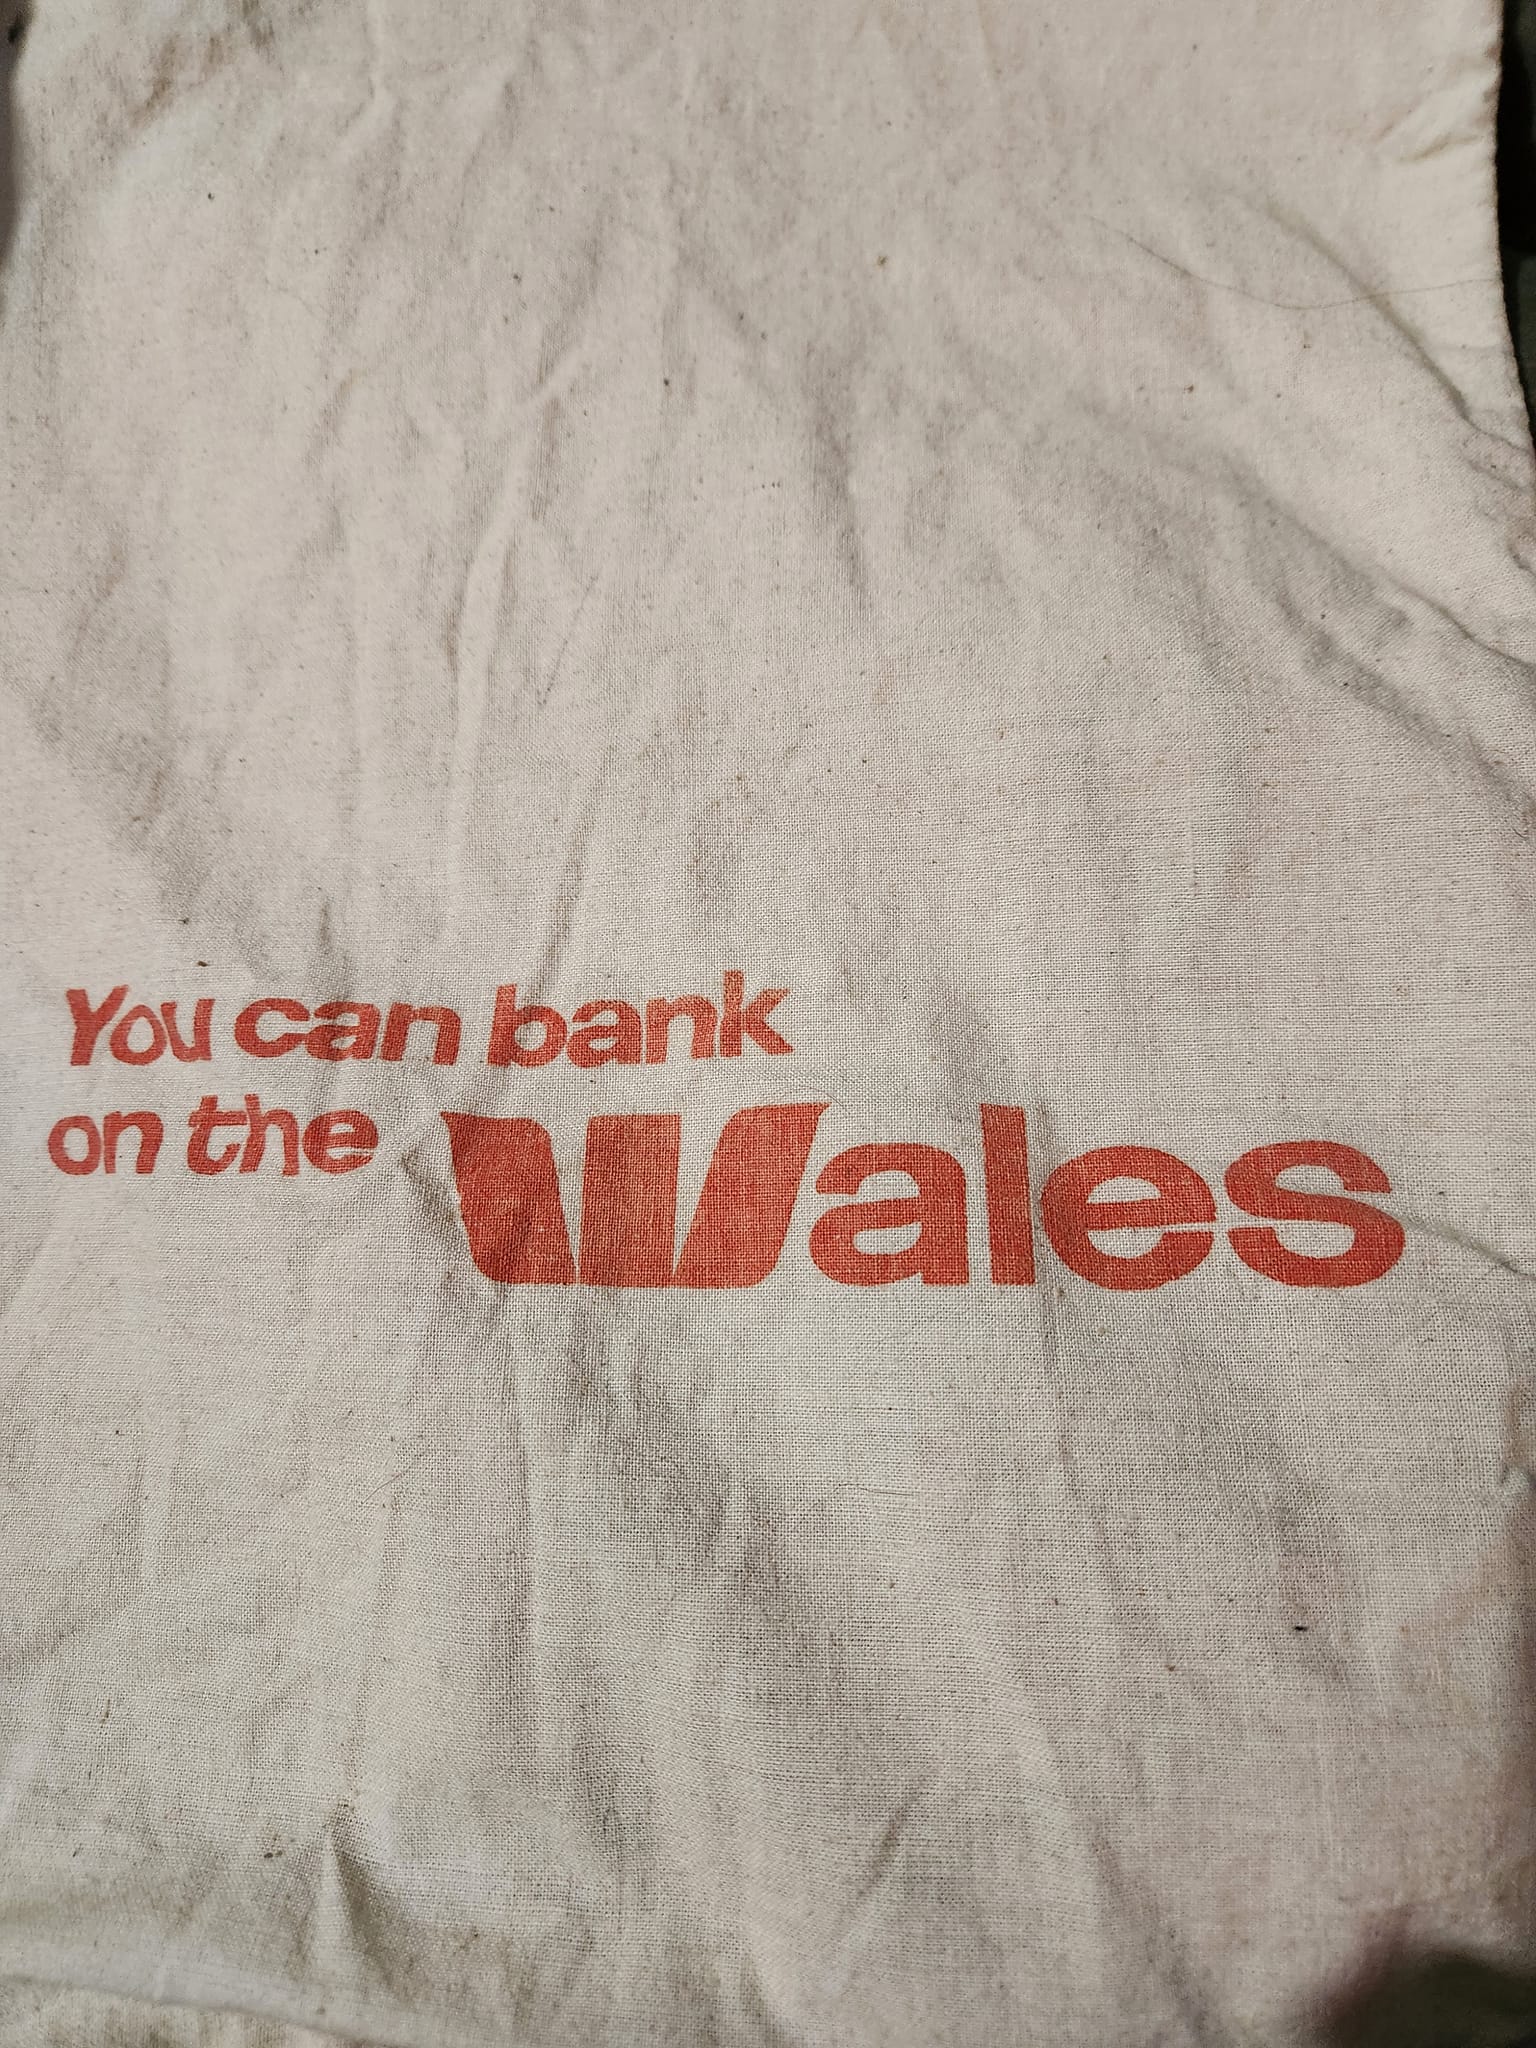 Wales company.jpg